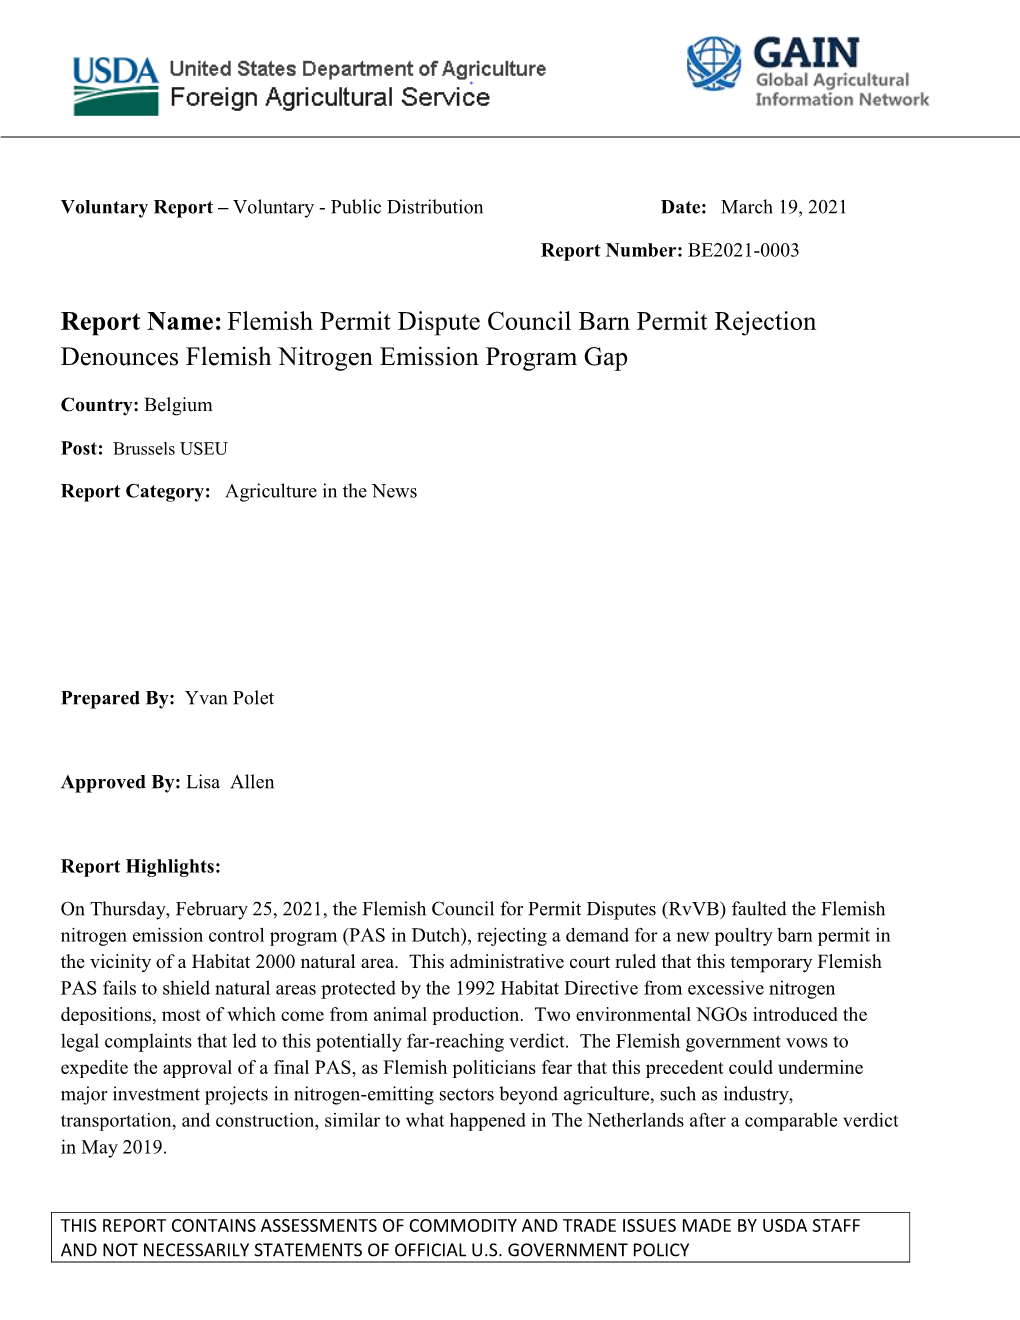 Report Name:Flemish Permit Dispute Council Barn Permit Rejection